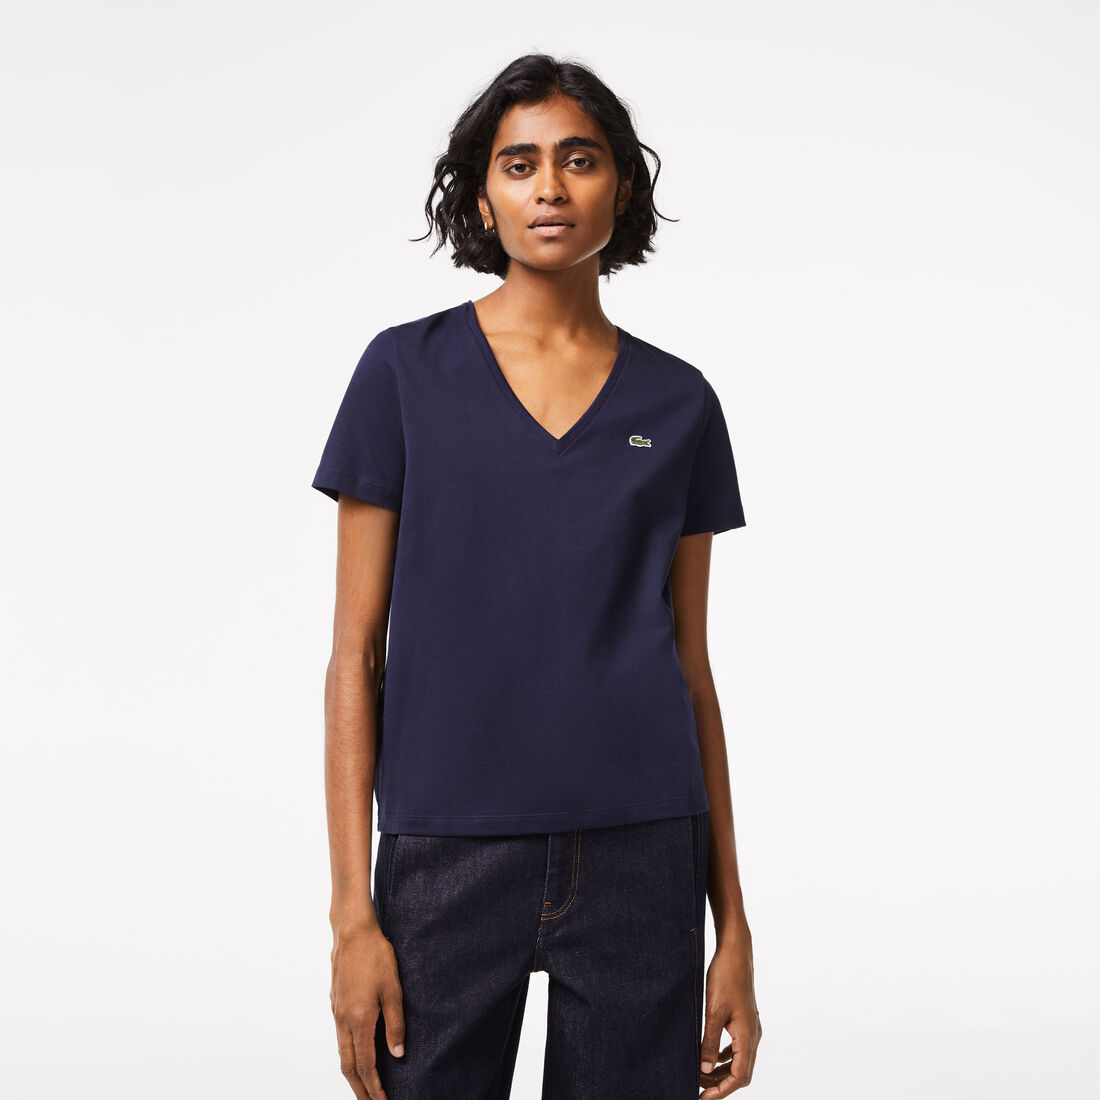 Lacoste V-neck Loose Fit Baumwoll T-shirts Damen Navy Blau | CWUD-35784